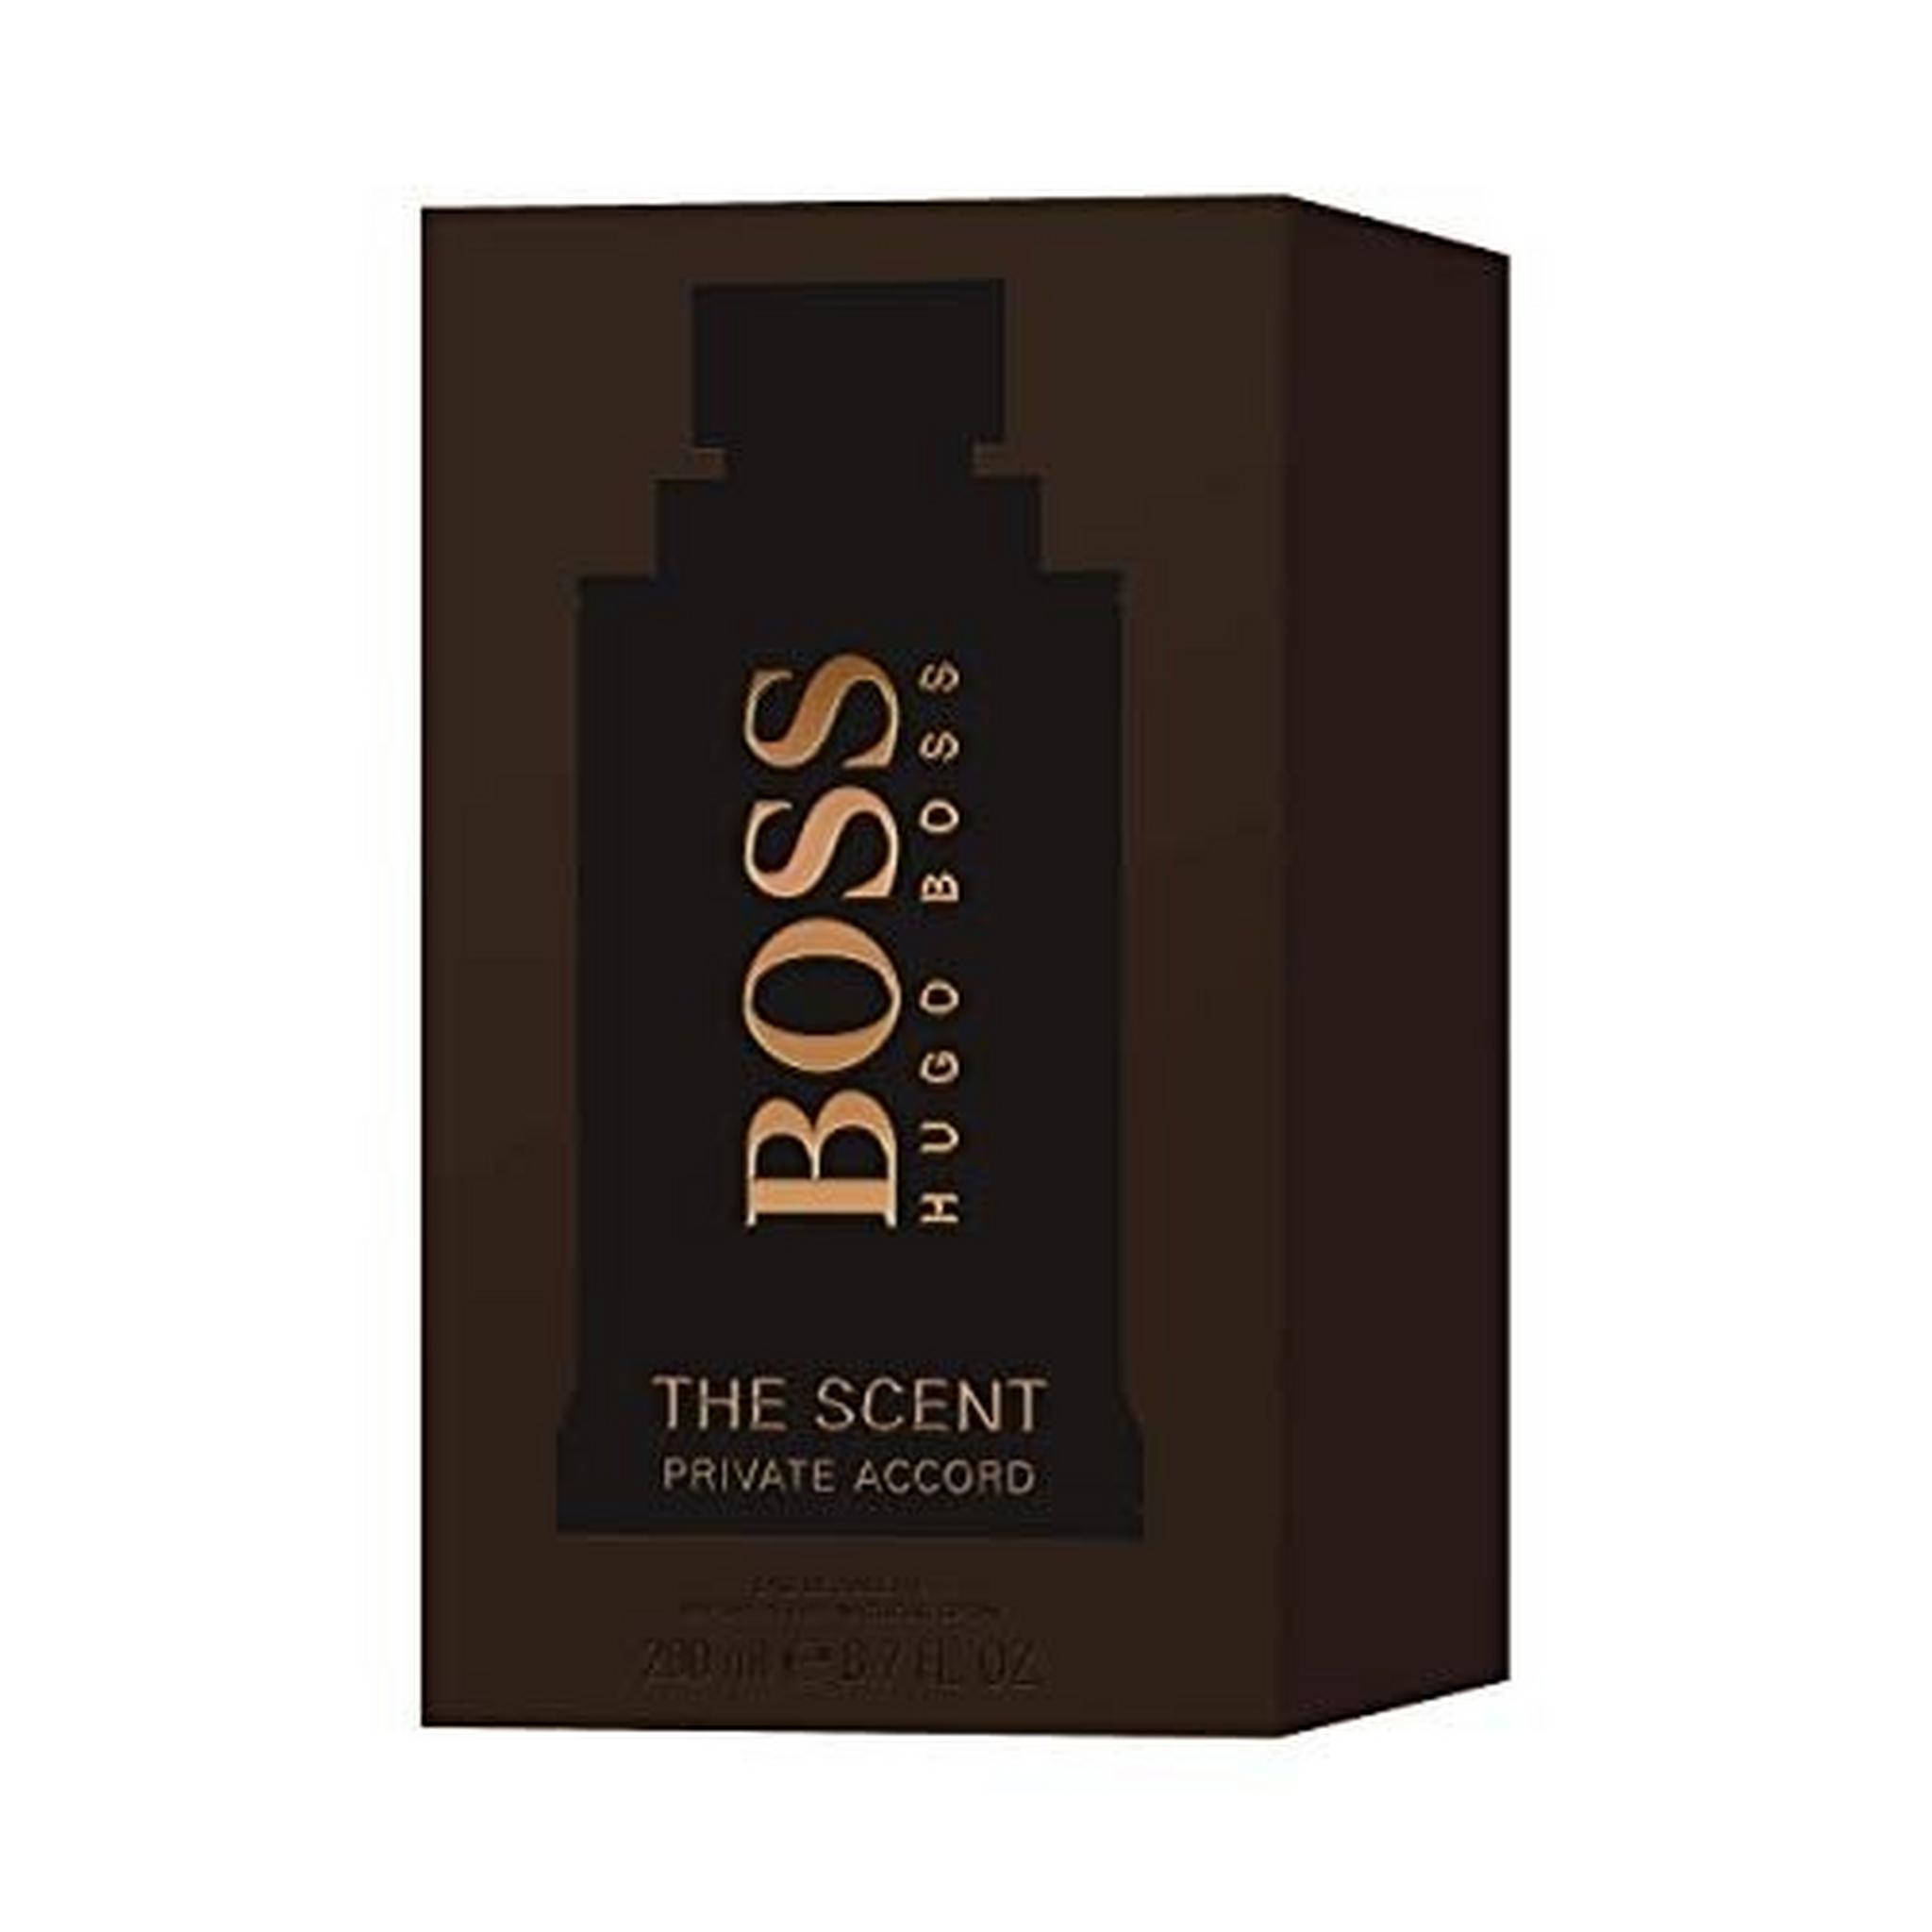 Hugo Boss The Scent Private Acord for Men Eau De Toilette 200ml